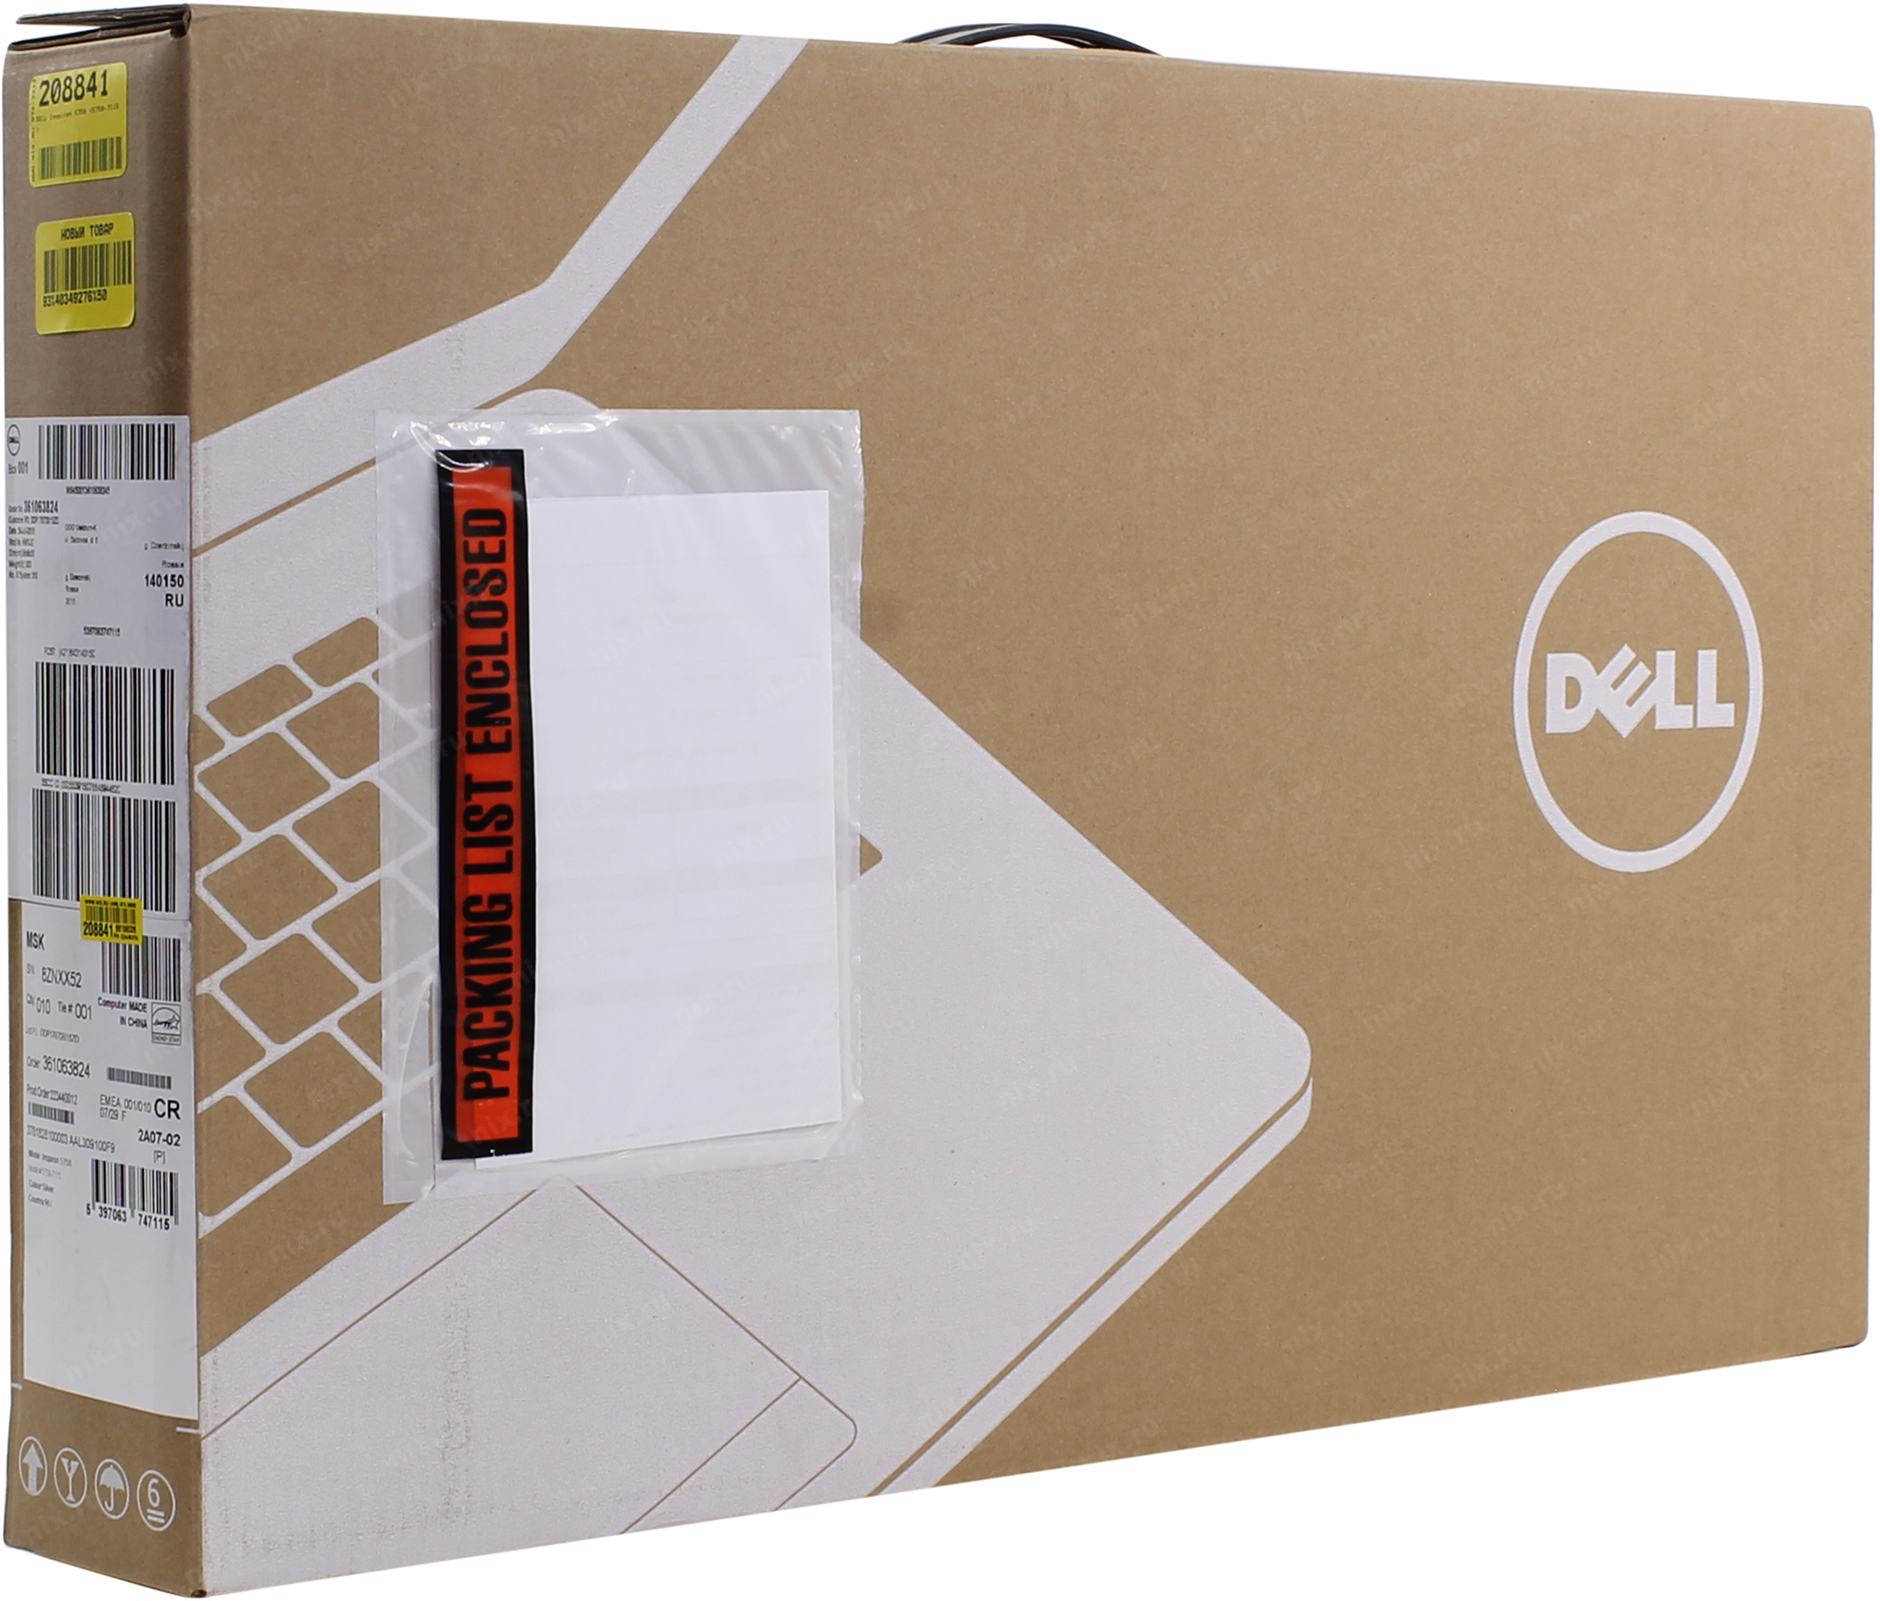 Купить Ноутбук Dell Inspiron 5758 17.3 I577810ddl-T1